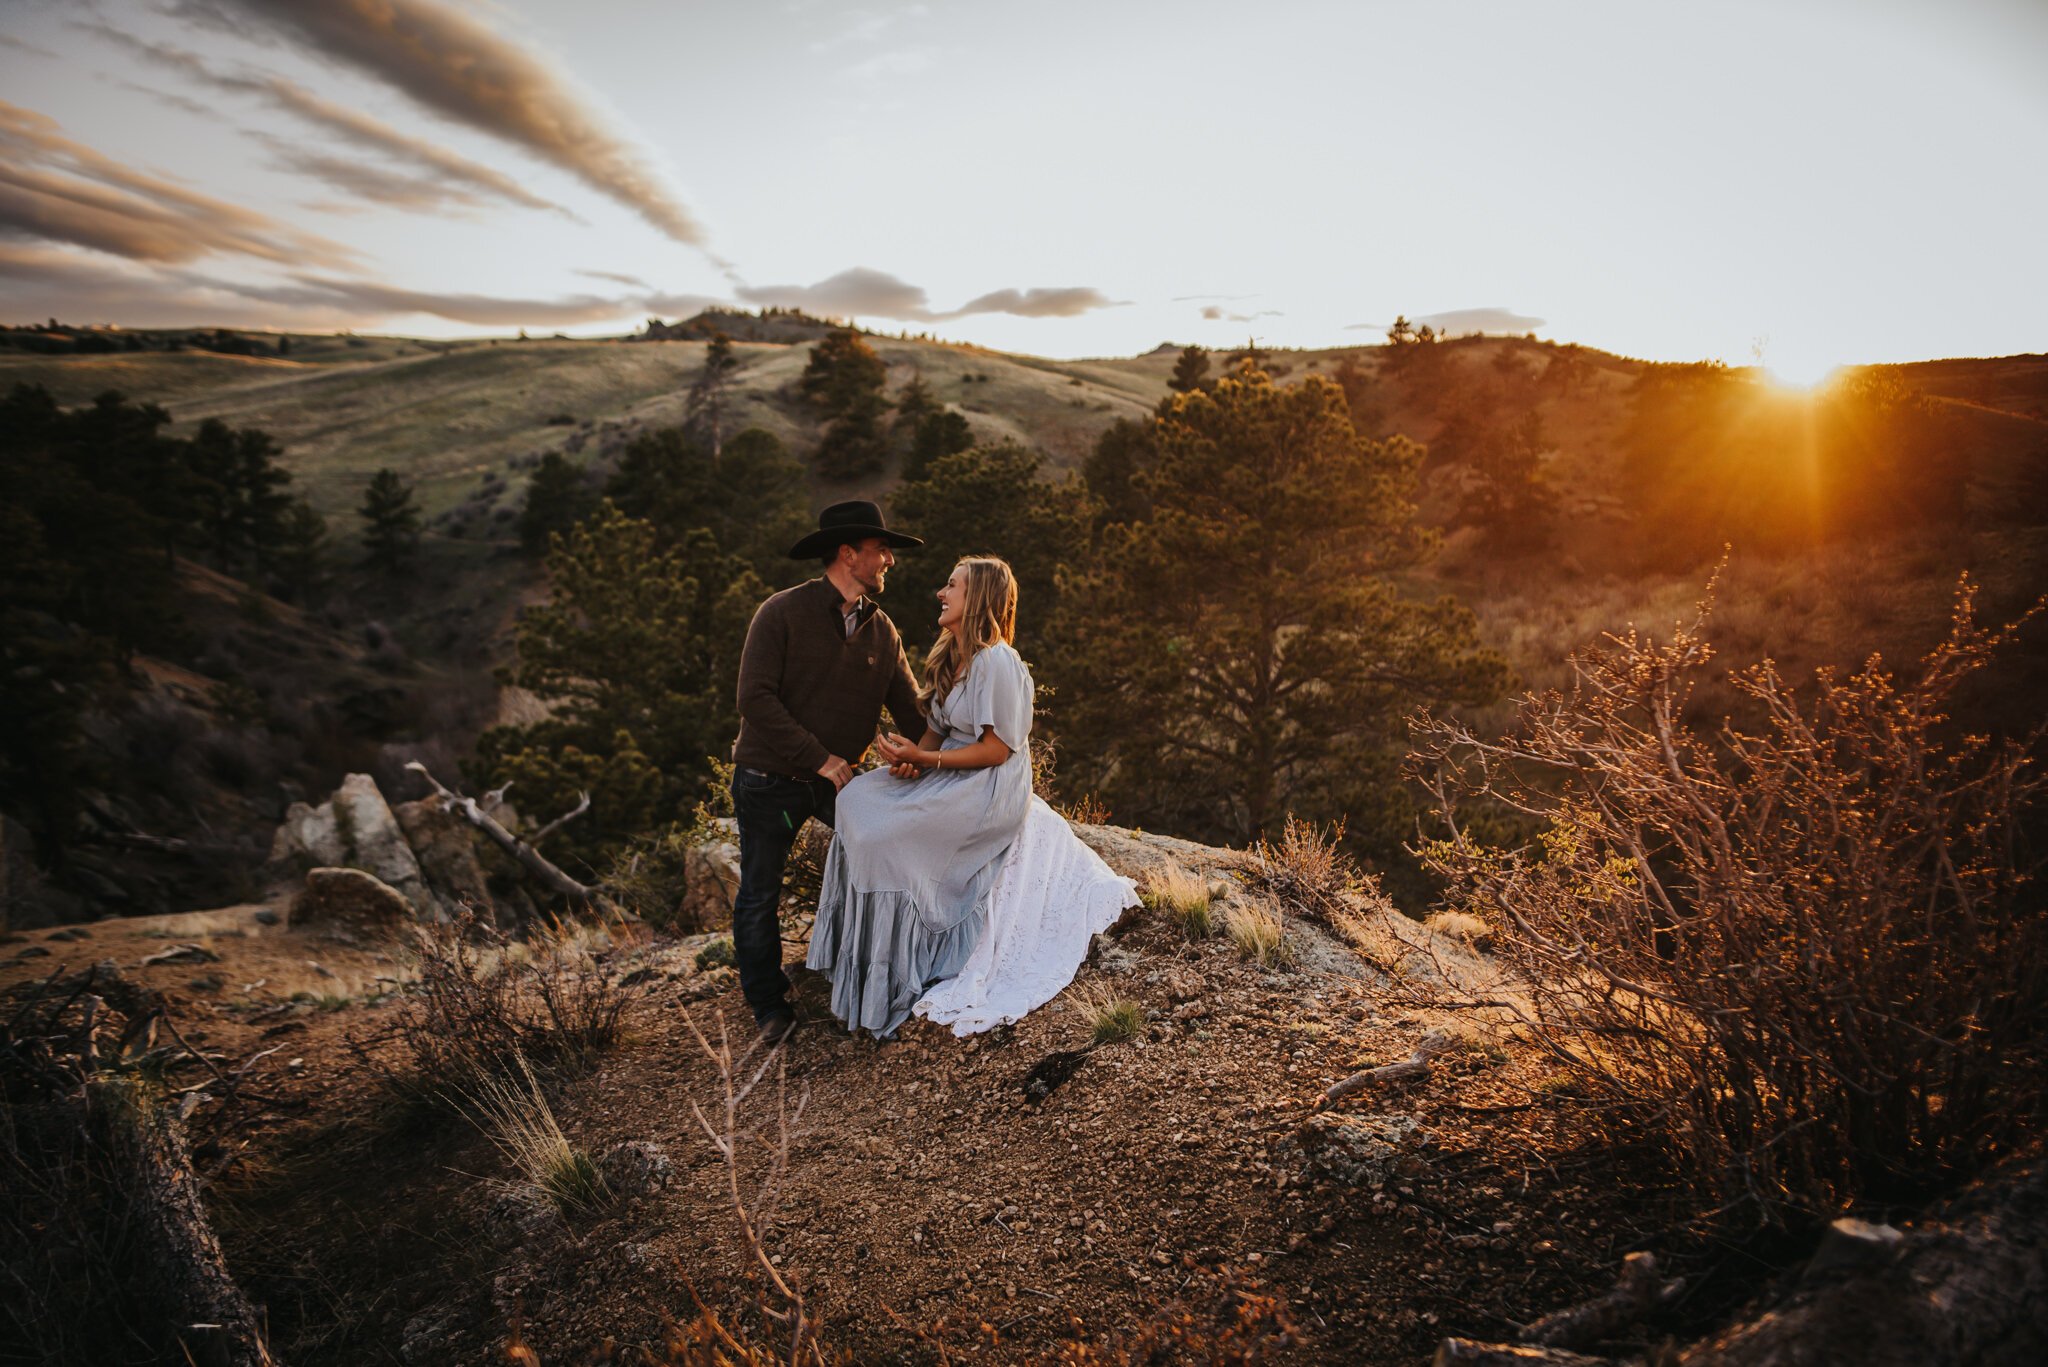 Shelby+and+Brady+Engagement+Session+Cheyenne+Wyoming+Sunset+Water+Fields+Rocks+Nature+Colorado+Photographer+Wild+Prairie+Photography-31-2020.jpeg